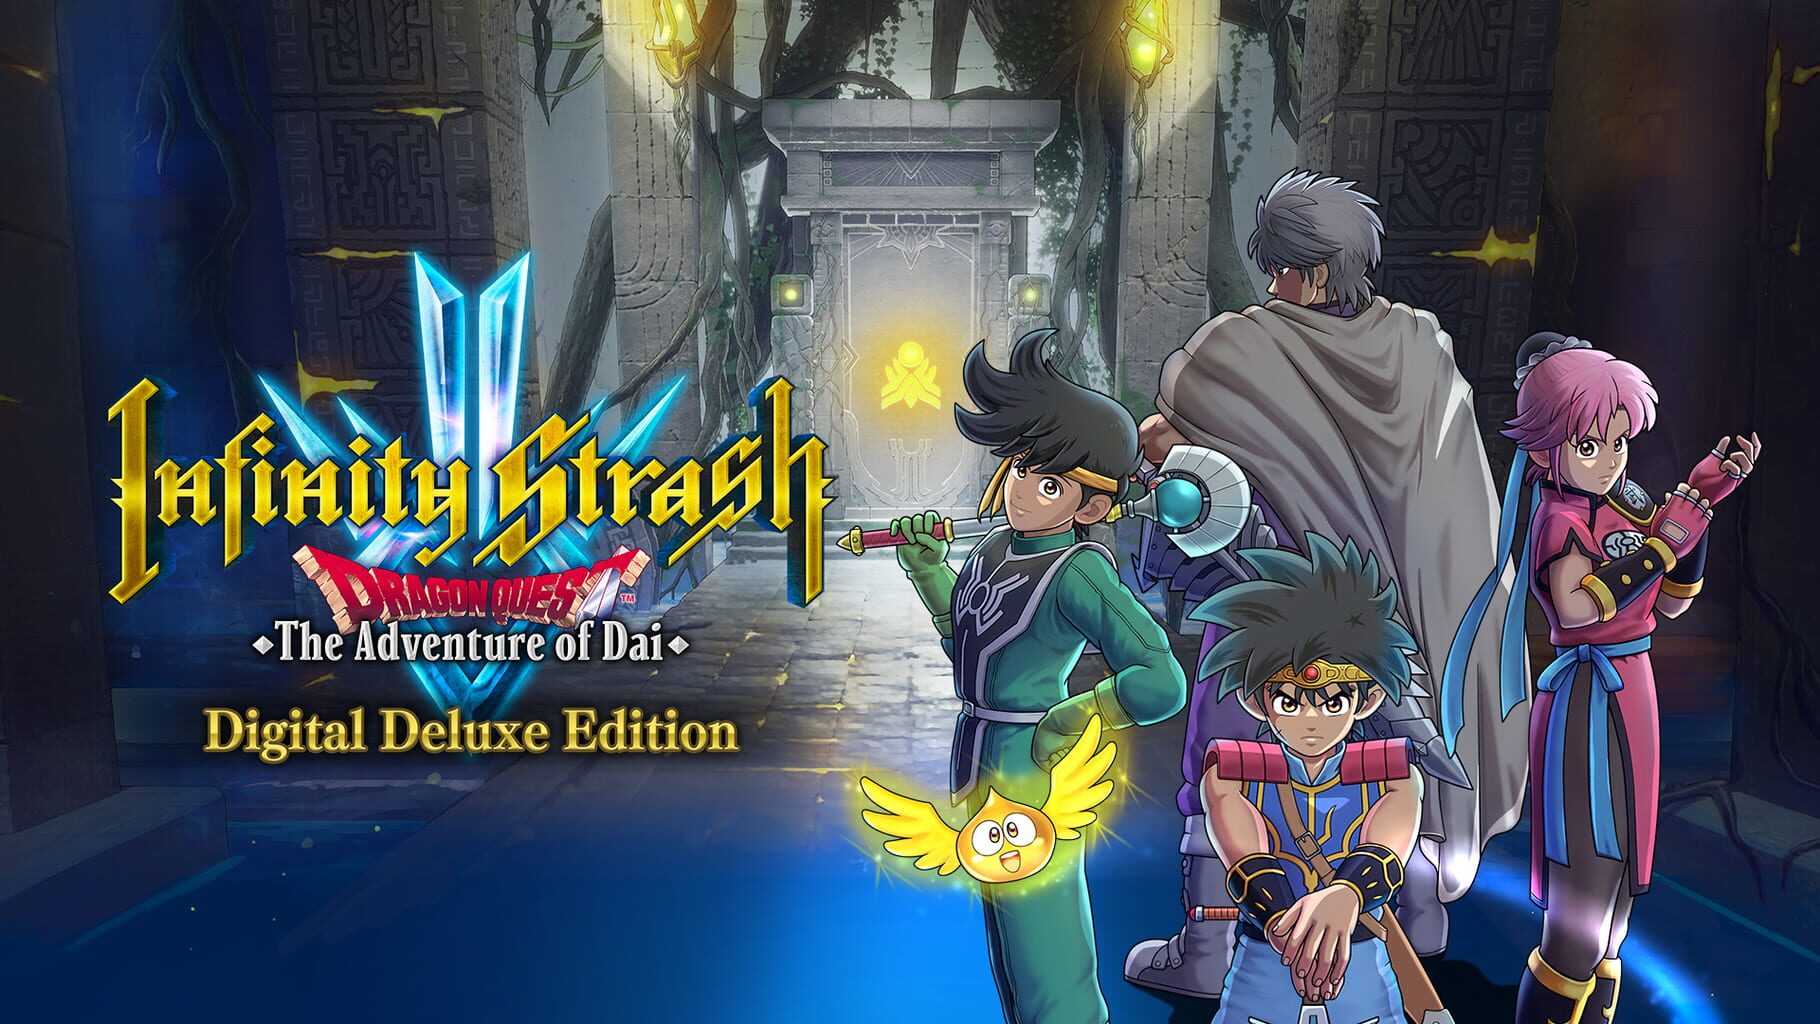 Arte - Infinity Strash: Dragon Quest - The Adventure of Dai: Digital Deluxe Edition